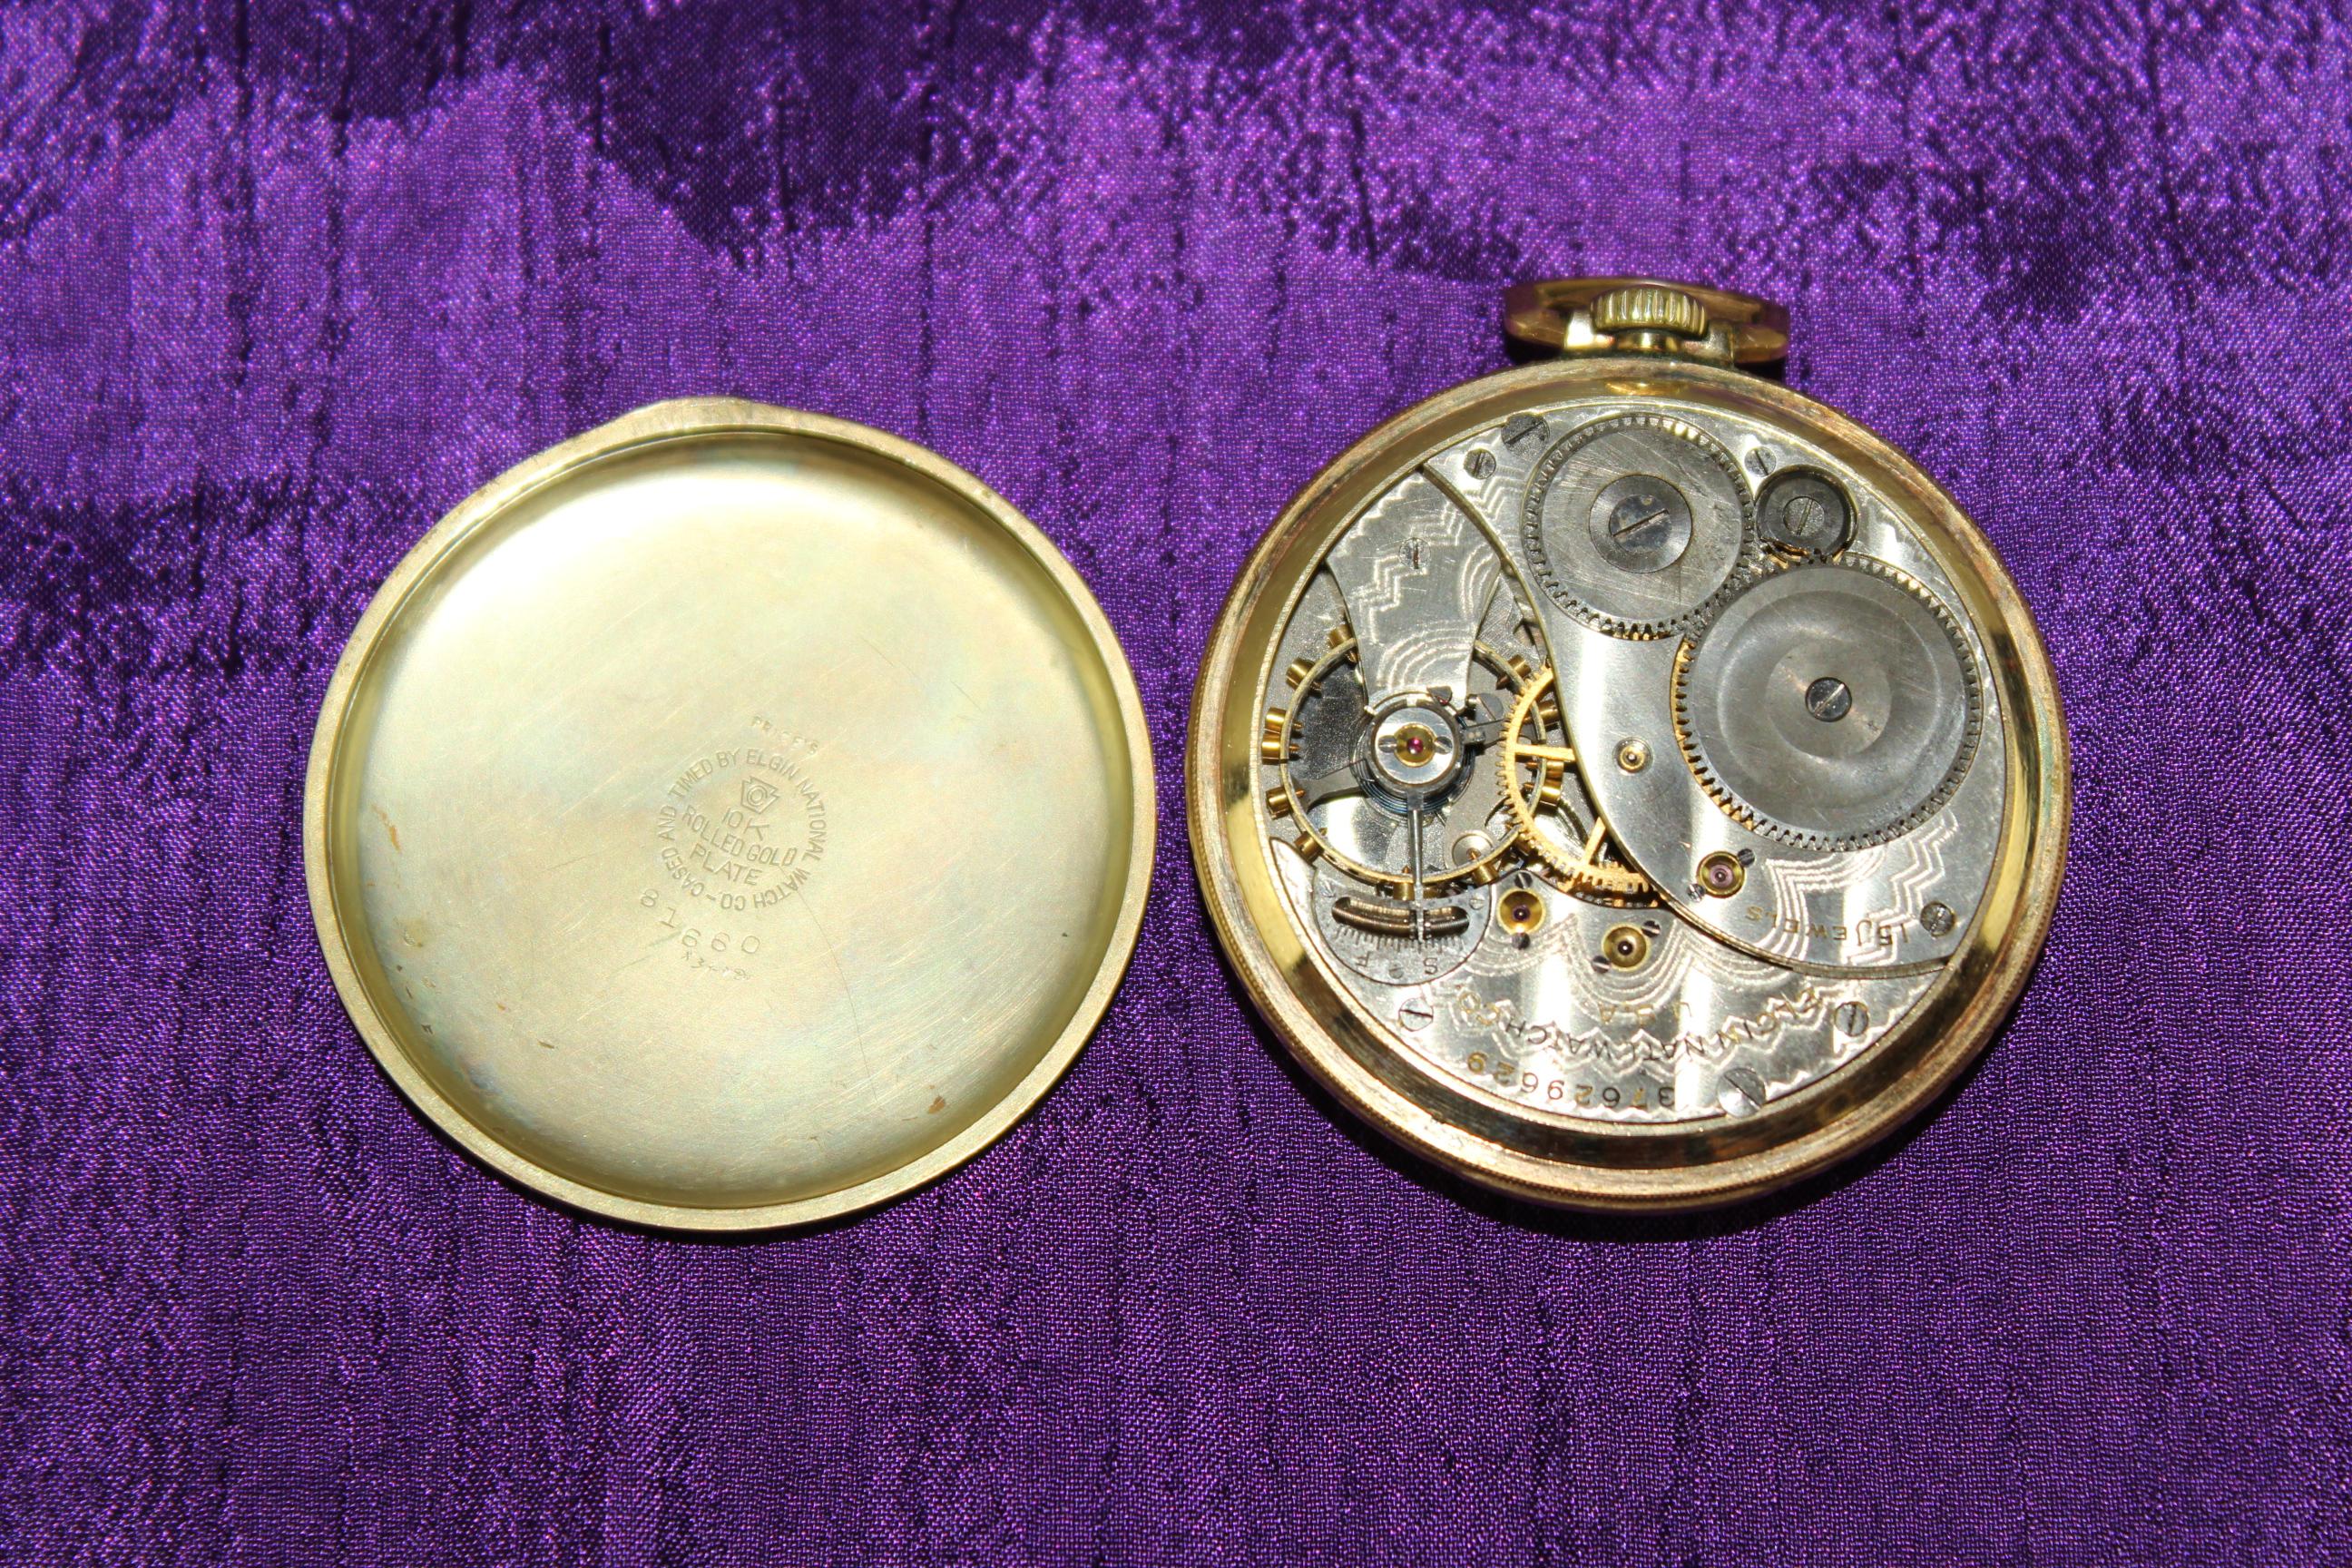 Elgin National Watch Co. "15 Jewels" Pocket Watch